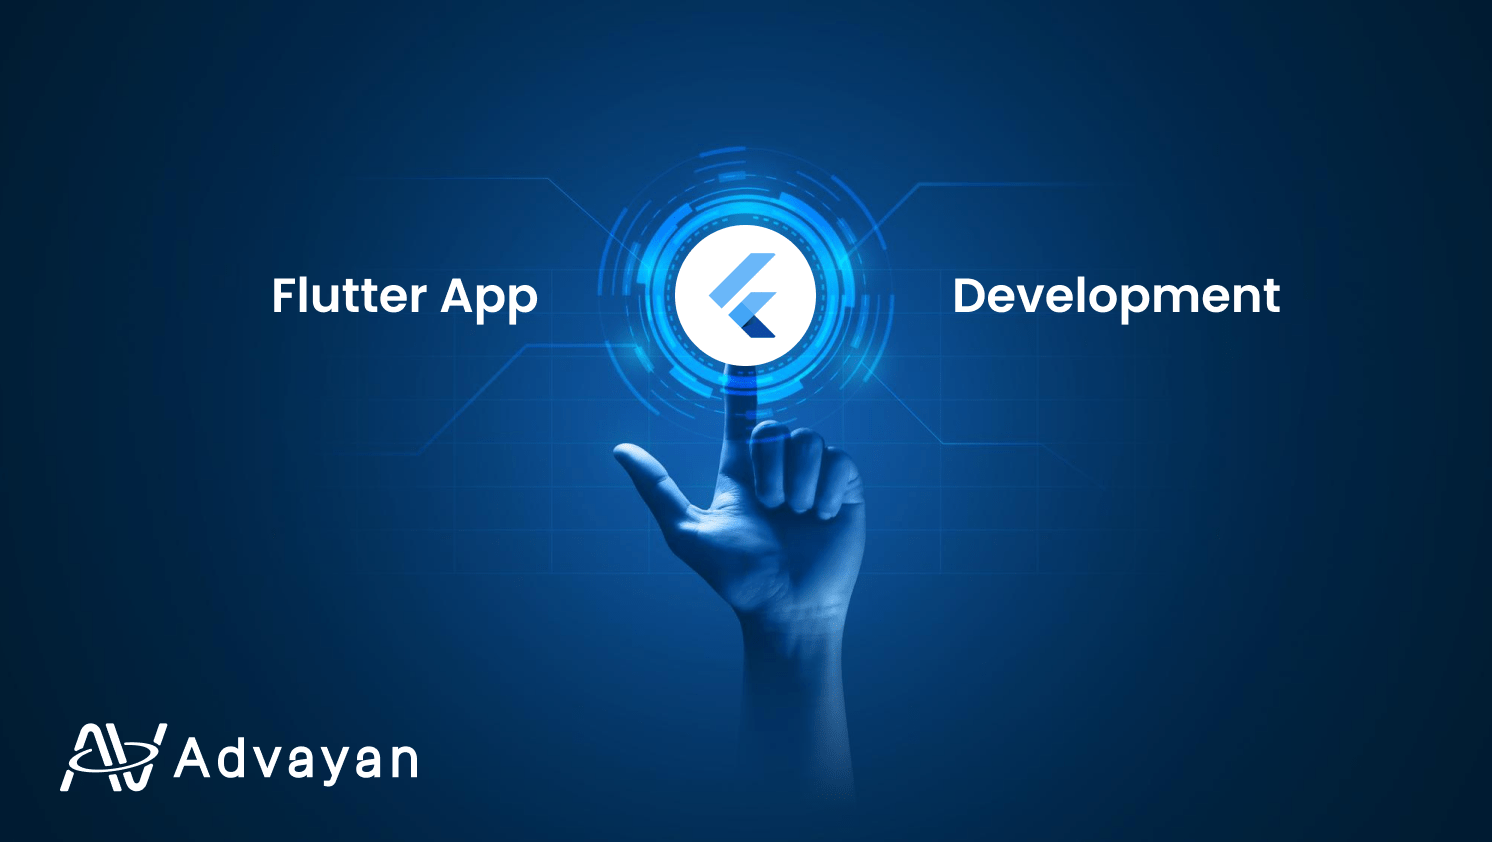 Business Value of Flutter App Development